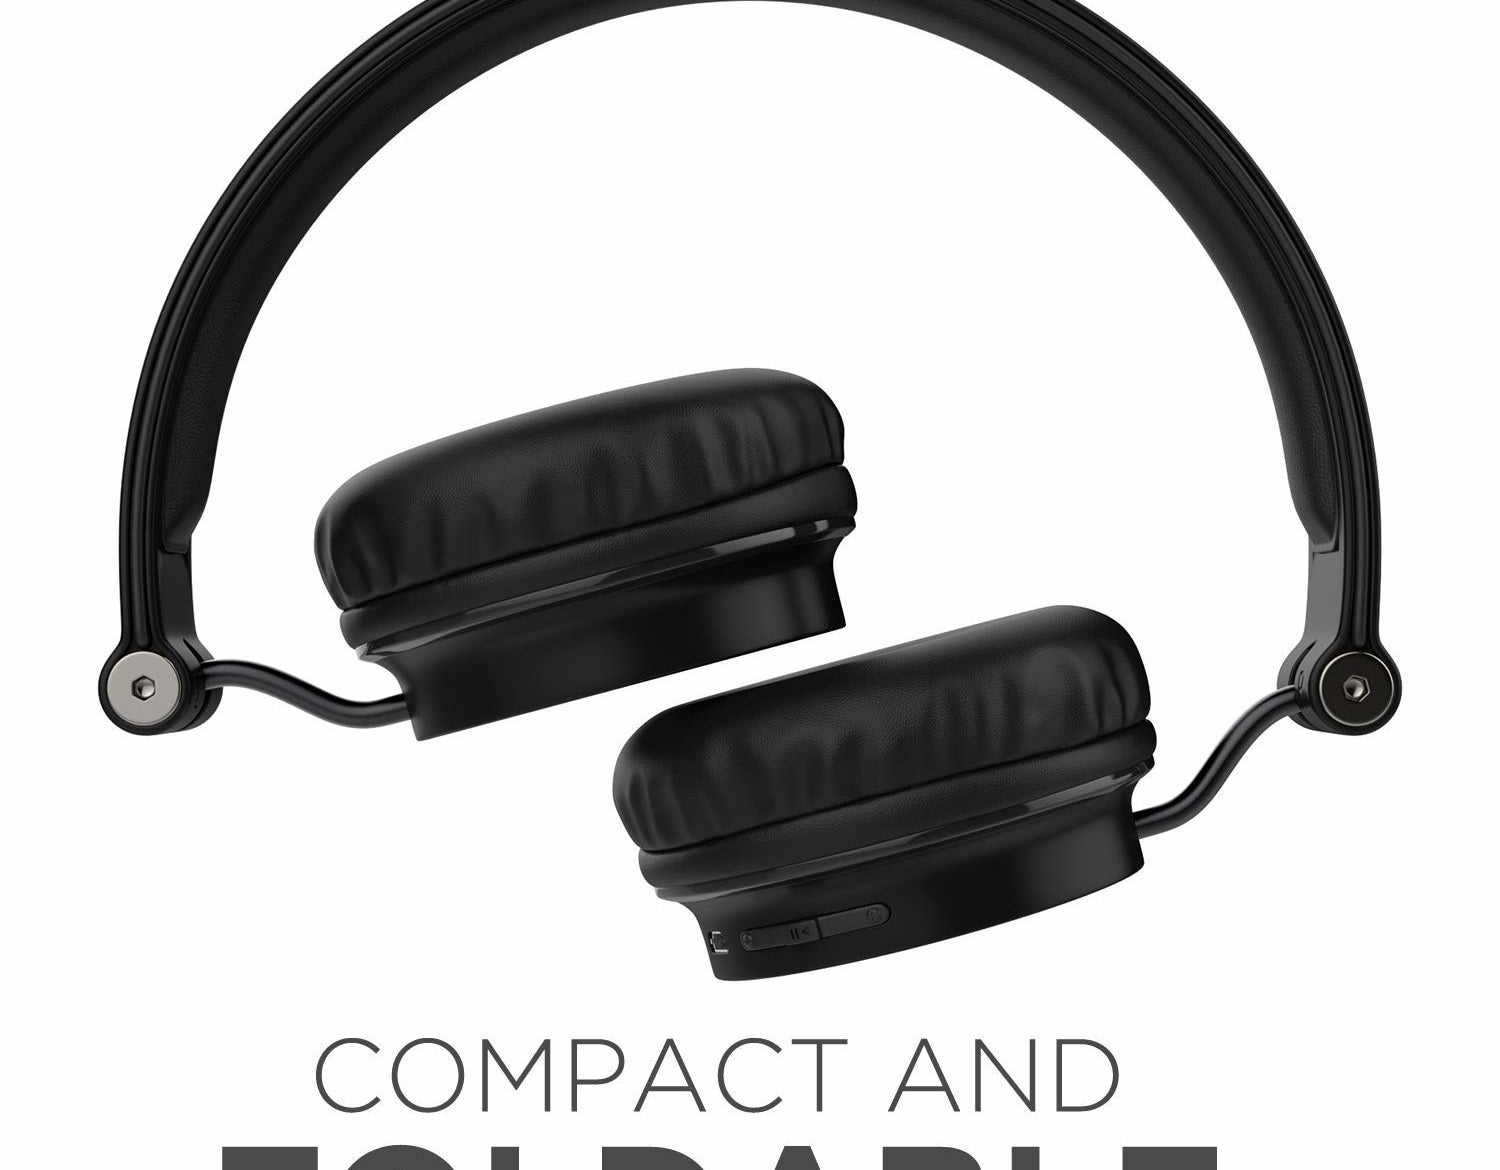 A pair Boat Rockerz400 headphones in black.